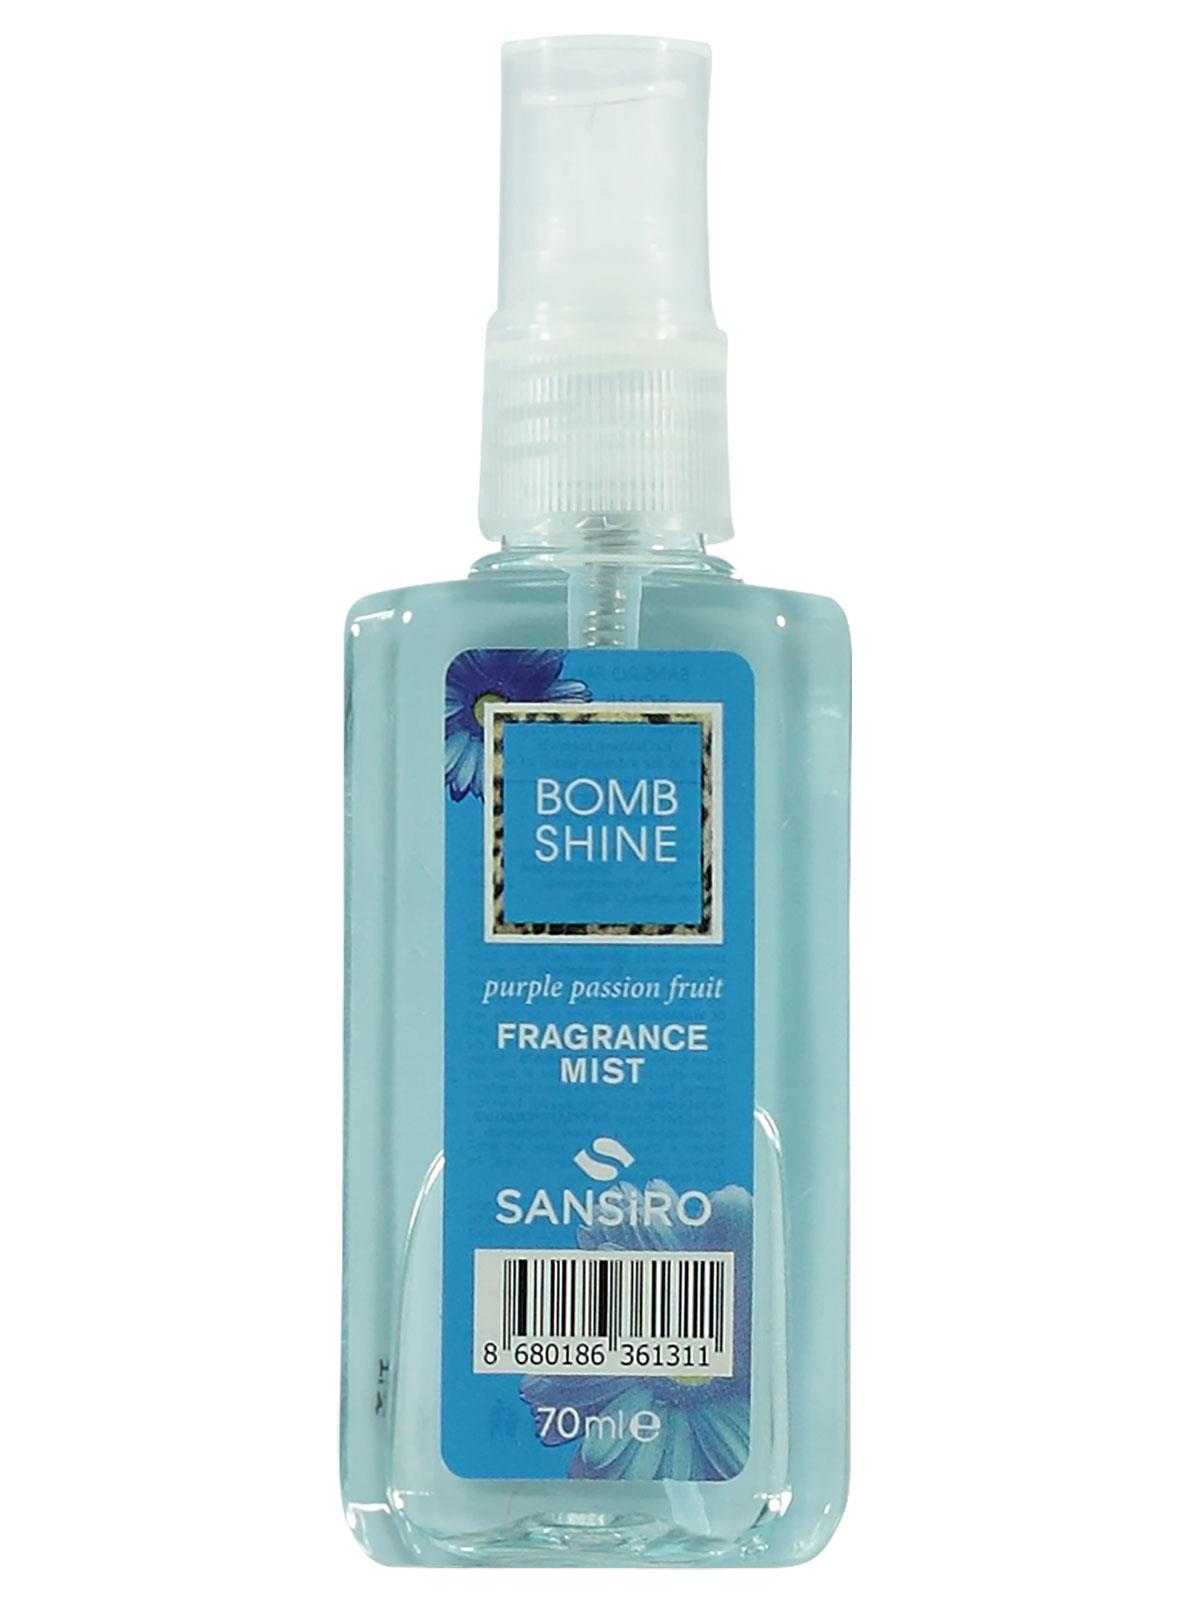 Sansiro Body Mıst Bomb Shıne 70 ml